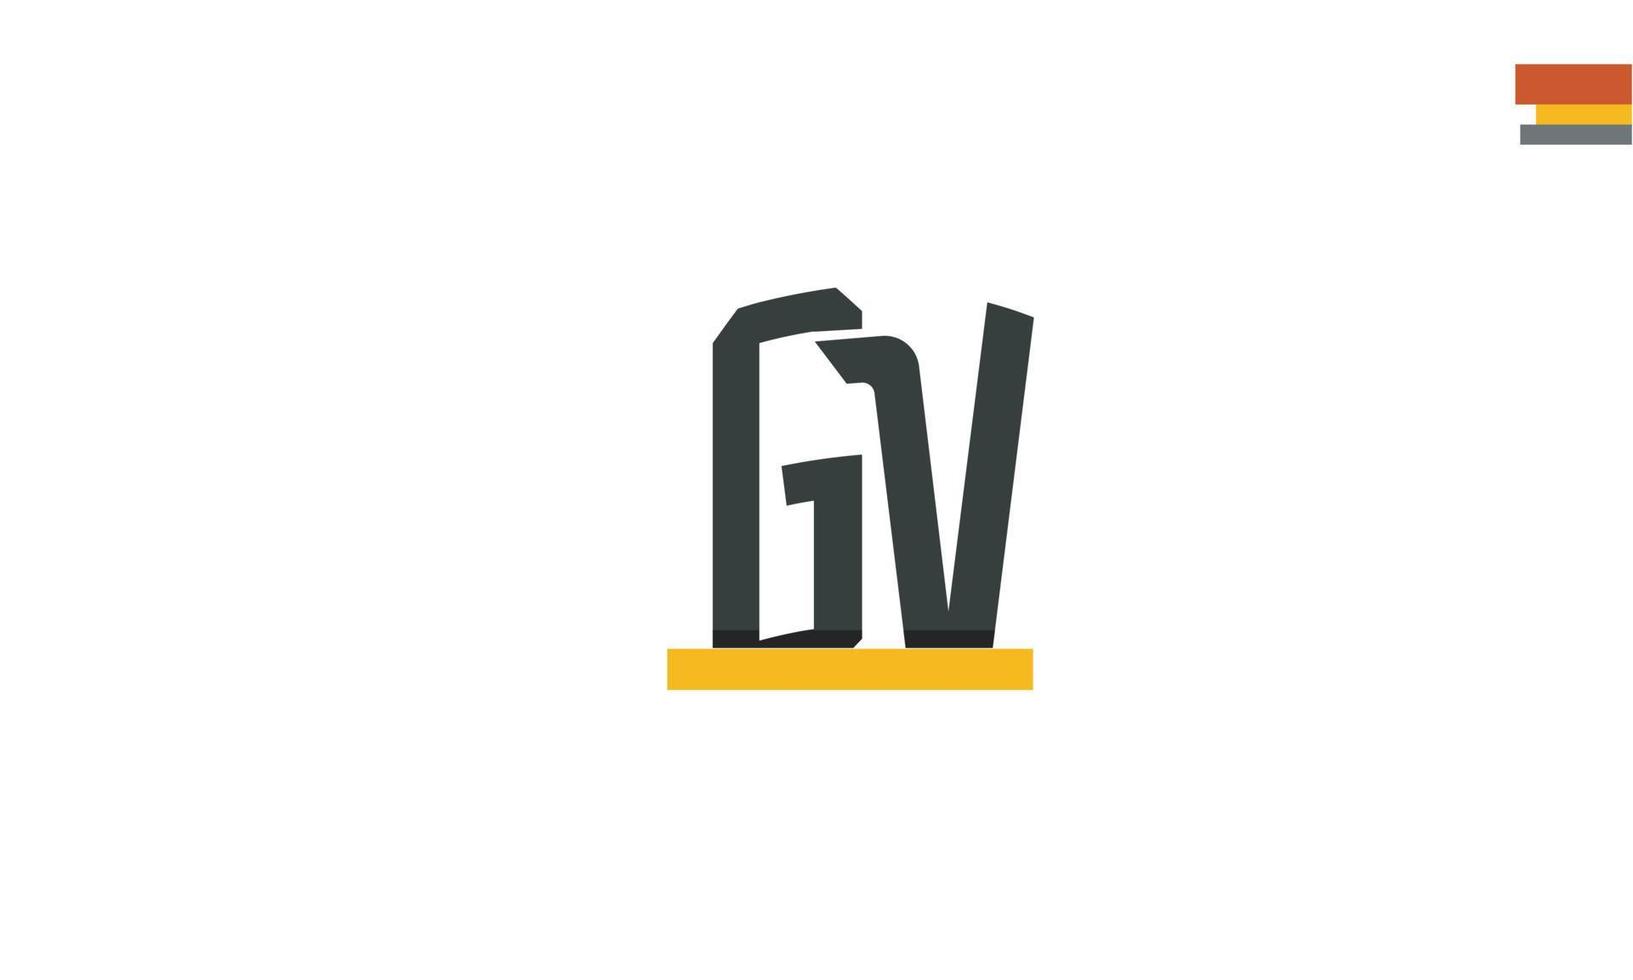 letras do alfabeto iniciais monograma logotipo gv, vg, g e v vetor